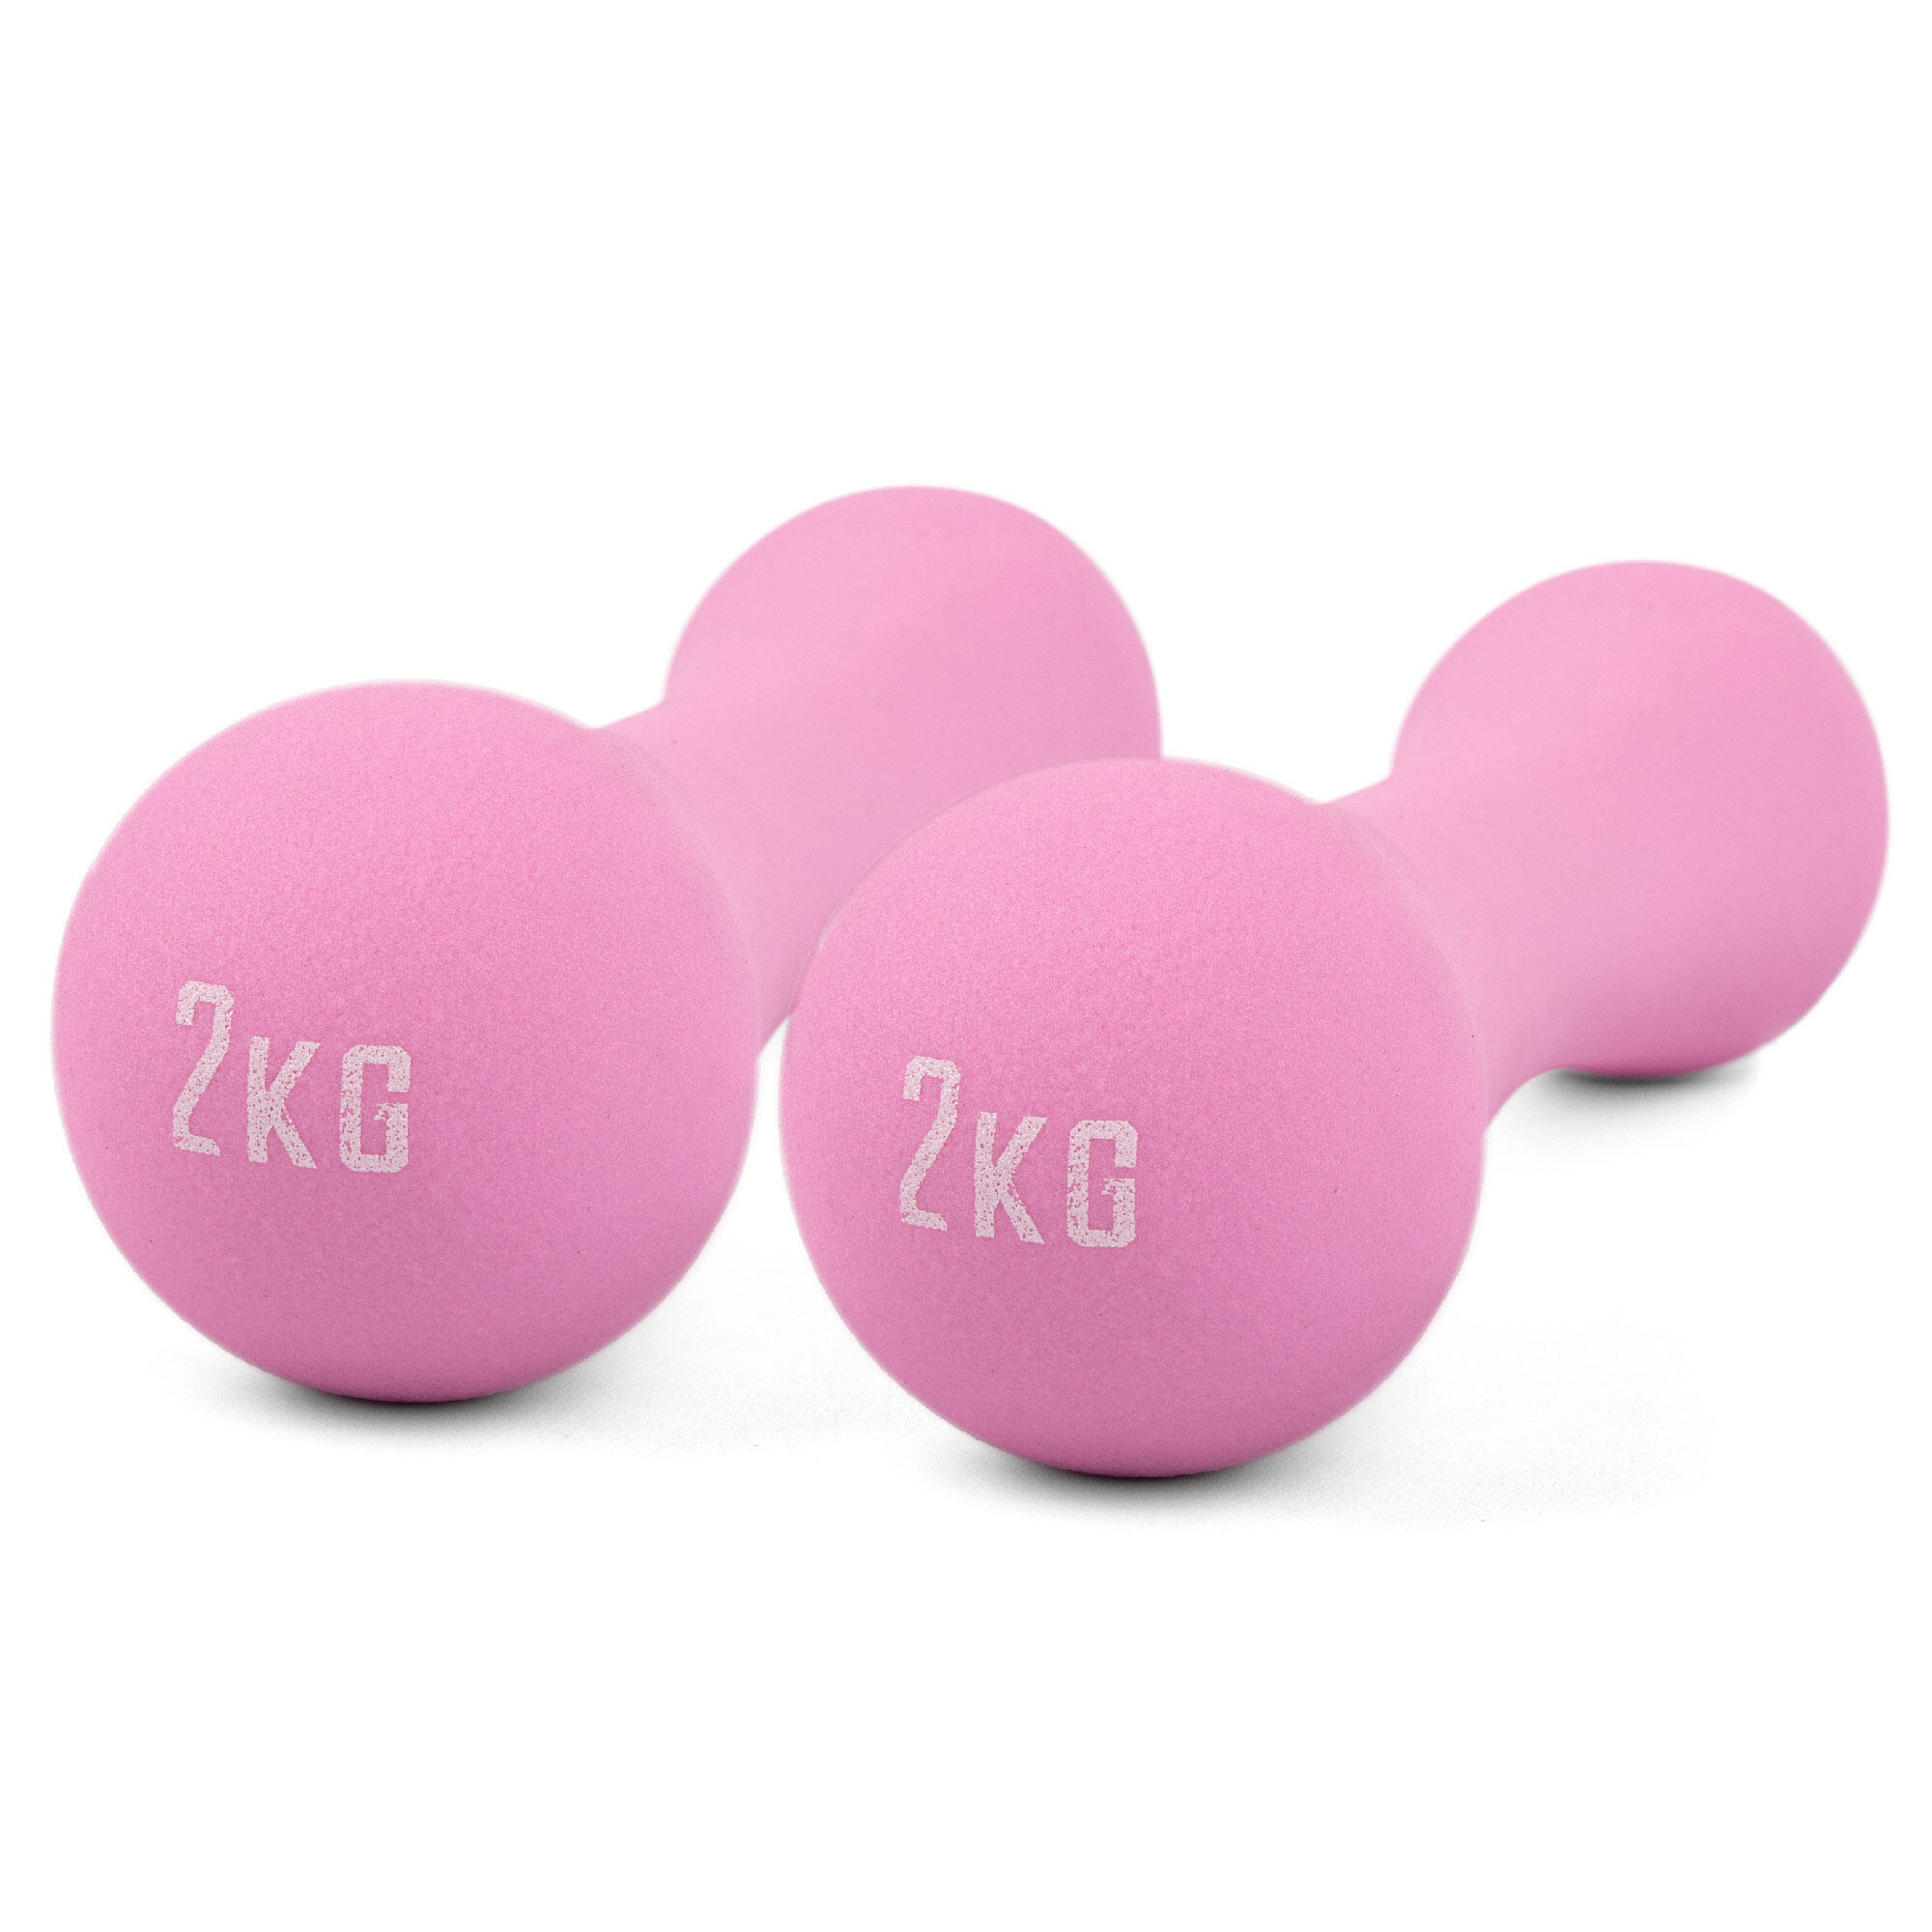 PHOENIX FITNESS Neoprene Dumbbell Weight - 2KG PAIR - Pink